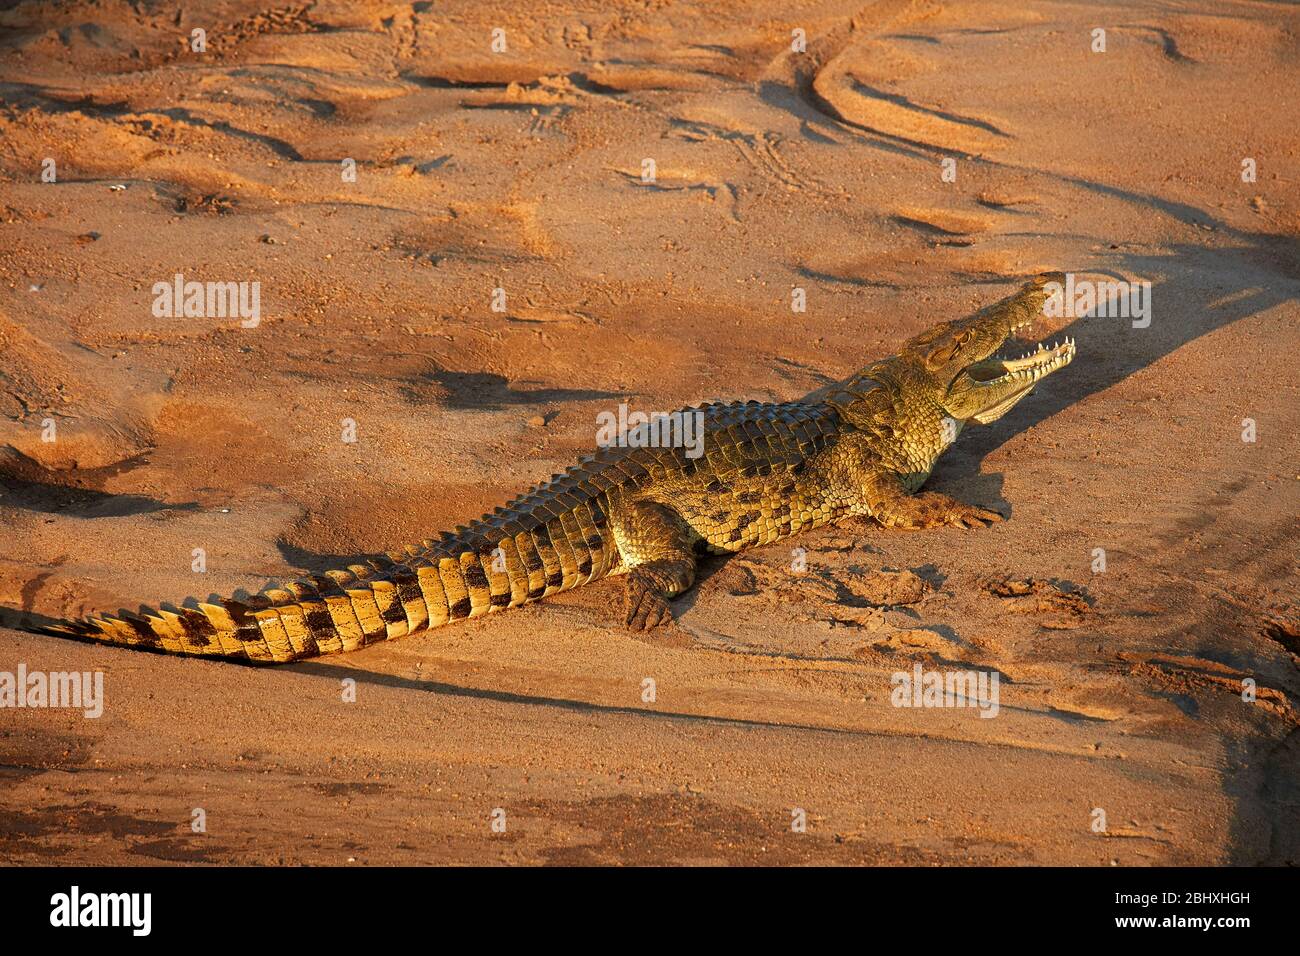 Crocodile (Crocodylus niloticus), Letaba River, Kruger National Park, South Africa Stock Photo